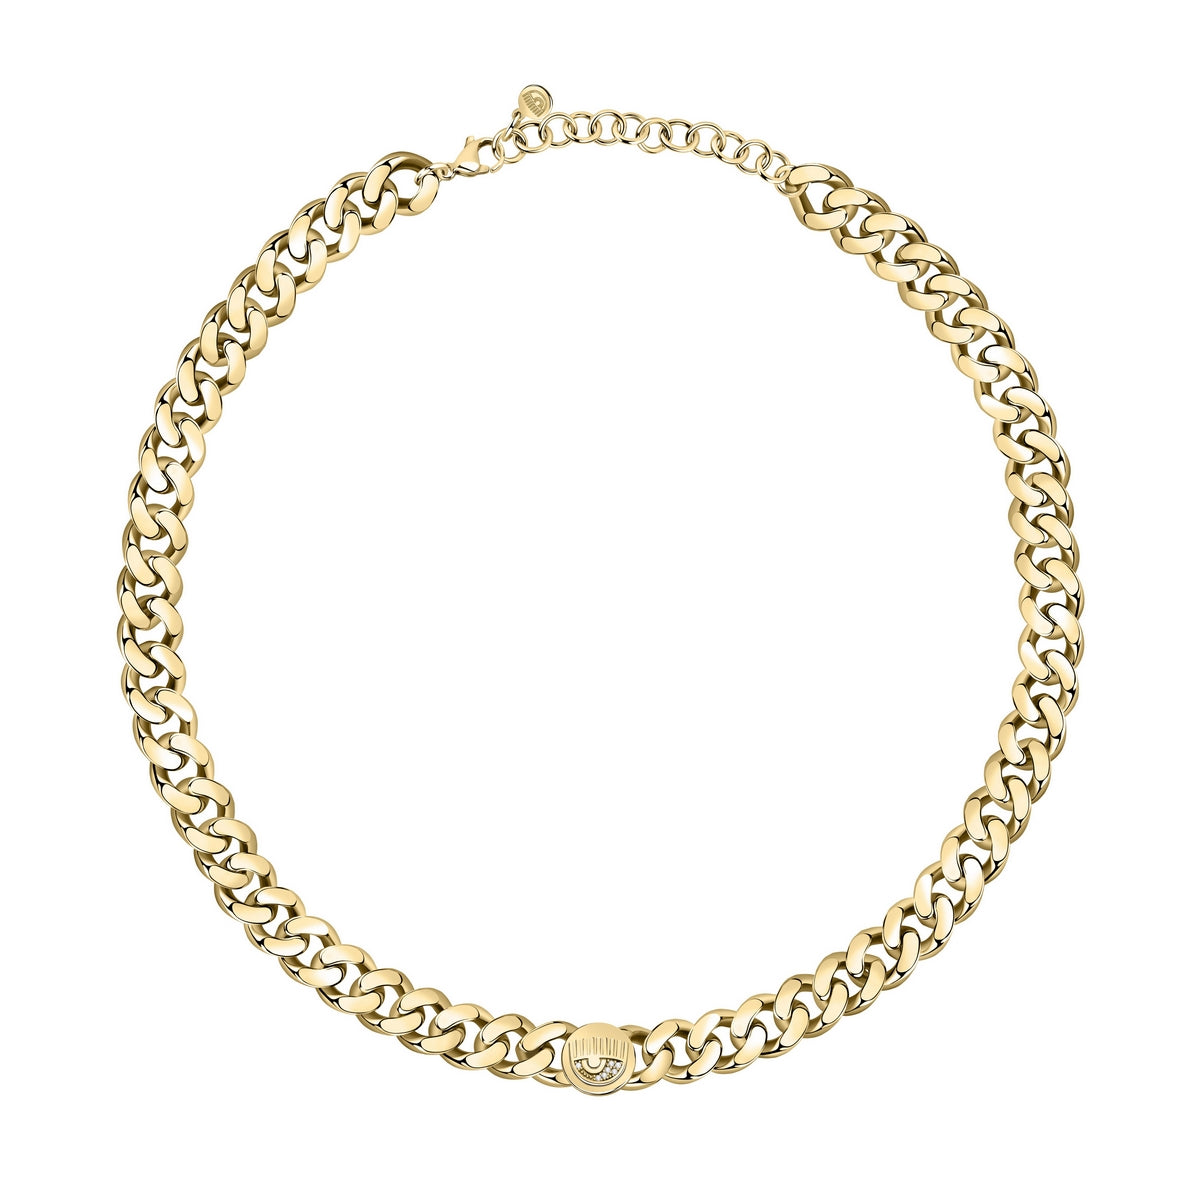 chiara ferragni chain necklace yg small chain with eyelike tag 38cm + 4